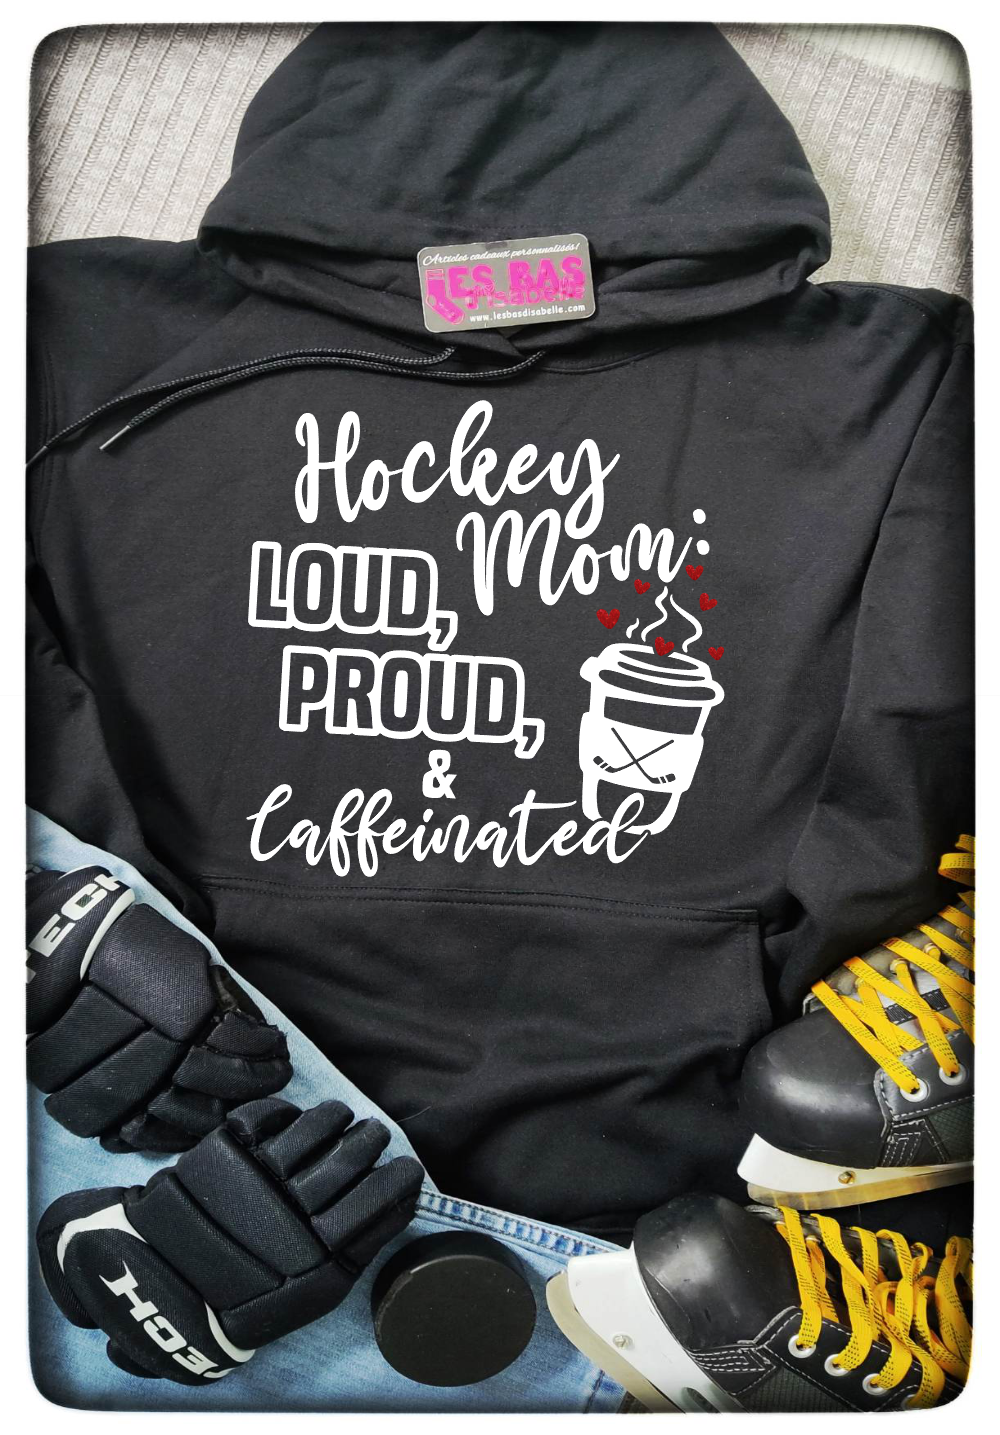 HOCKEY MOM: PROUD, LOUD AND CAFFEINATED